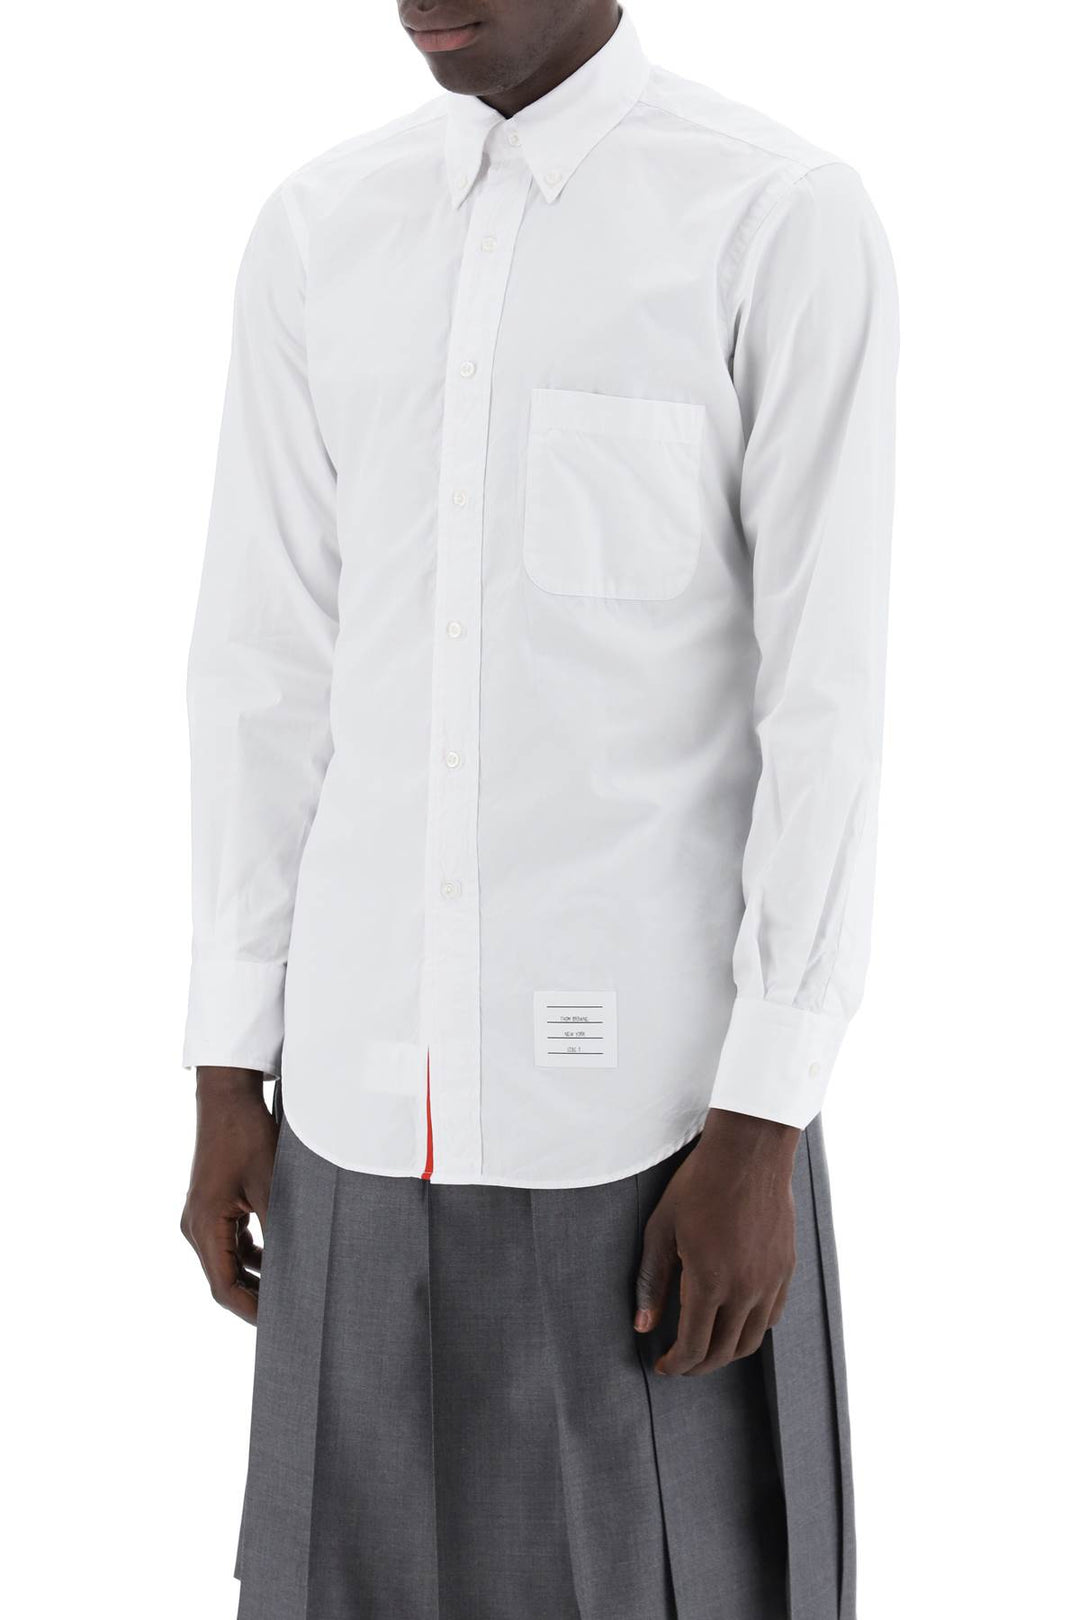 Thom Browne Classic Fit Oxford Shirt   White